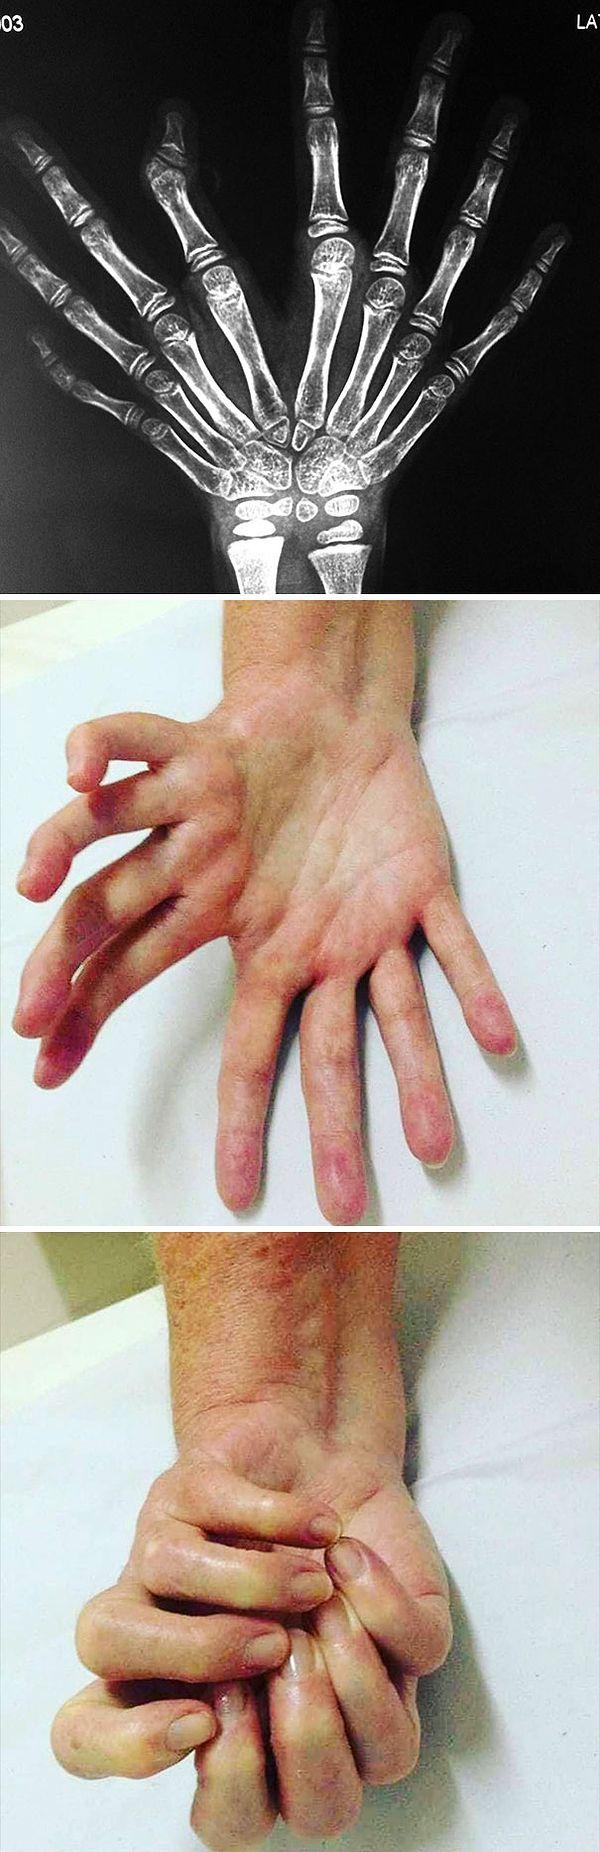 6. "Ulnar Dimelia Or Mirror Hand Syndrome"